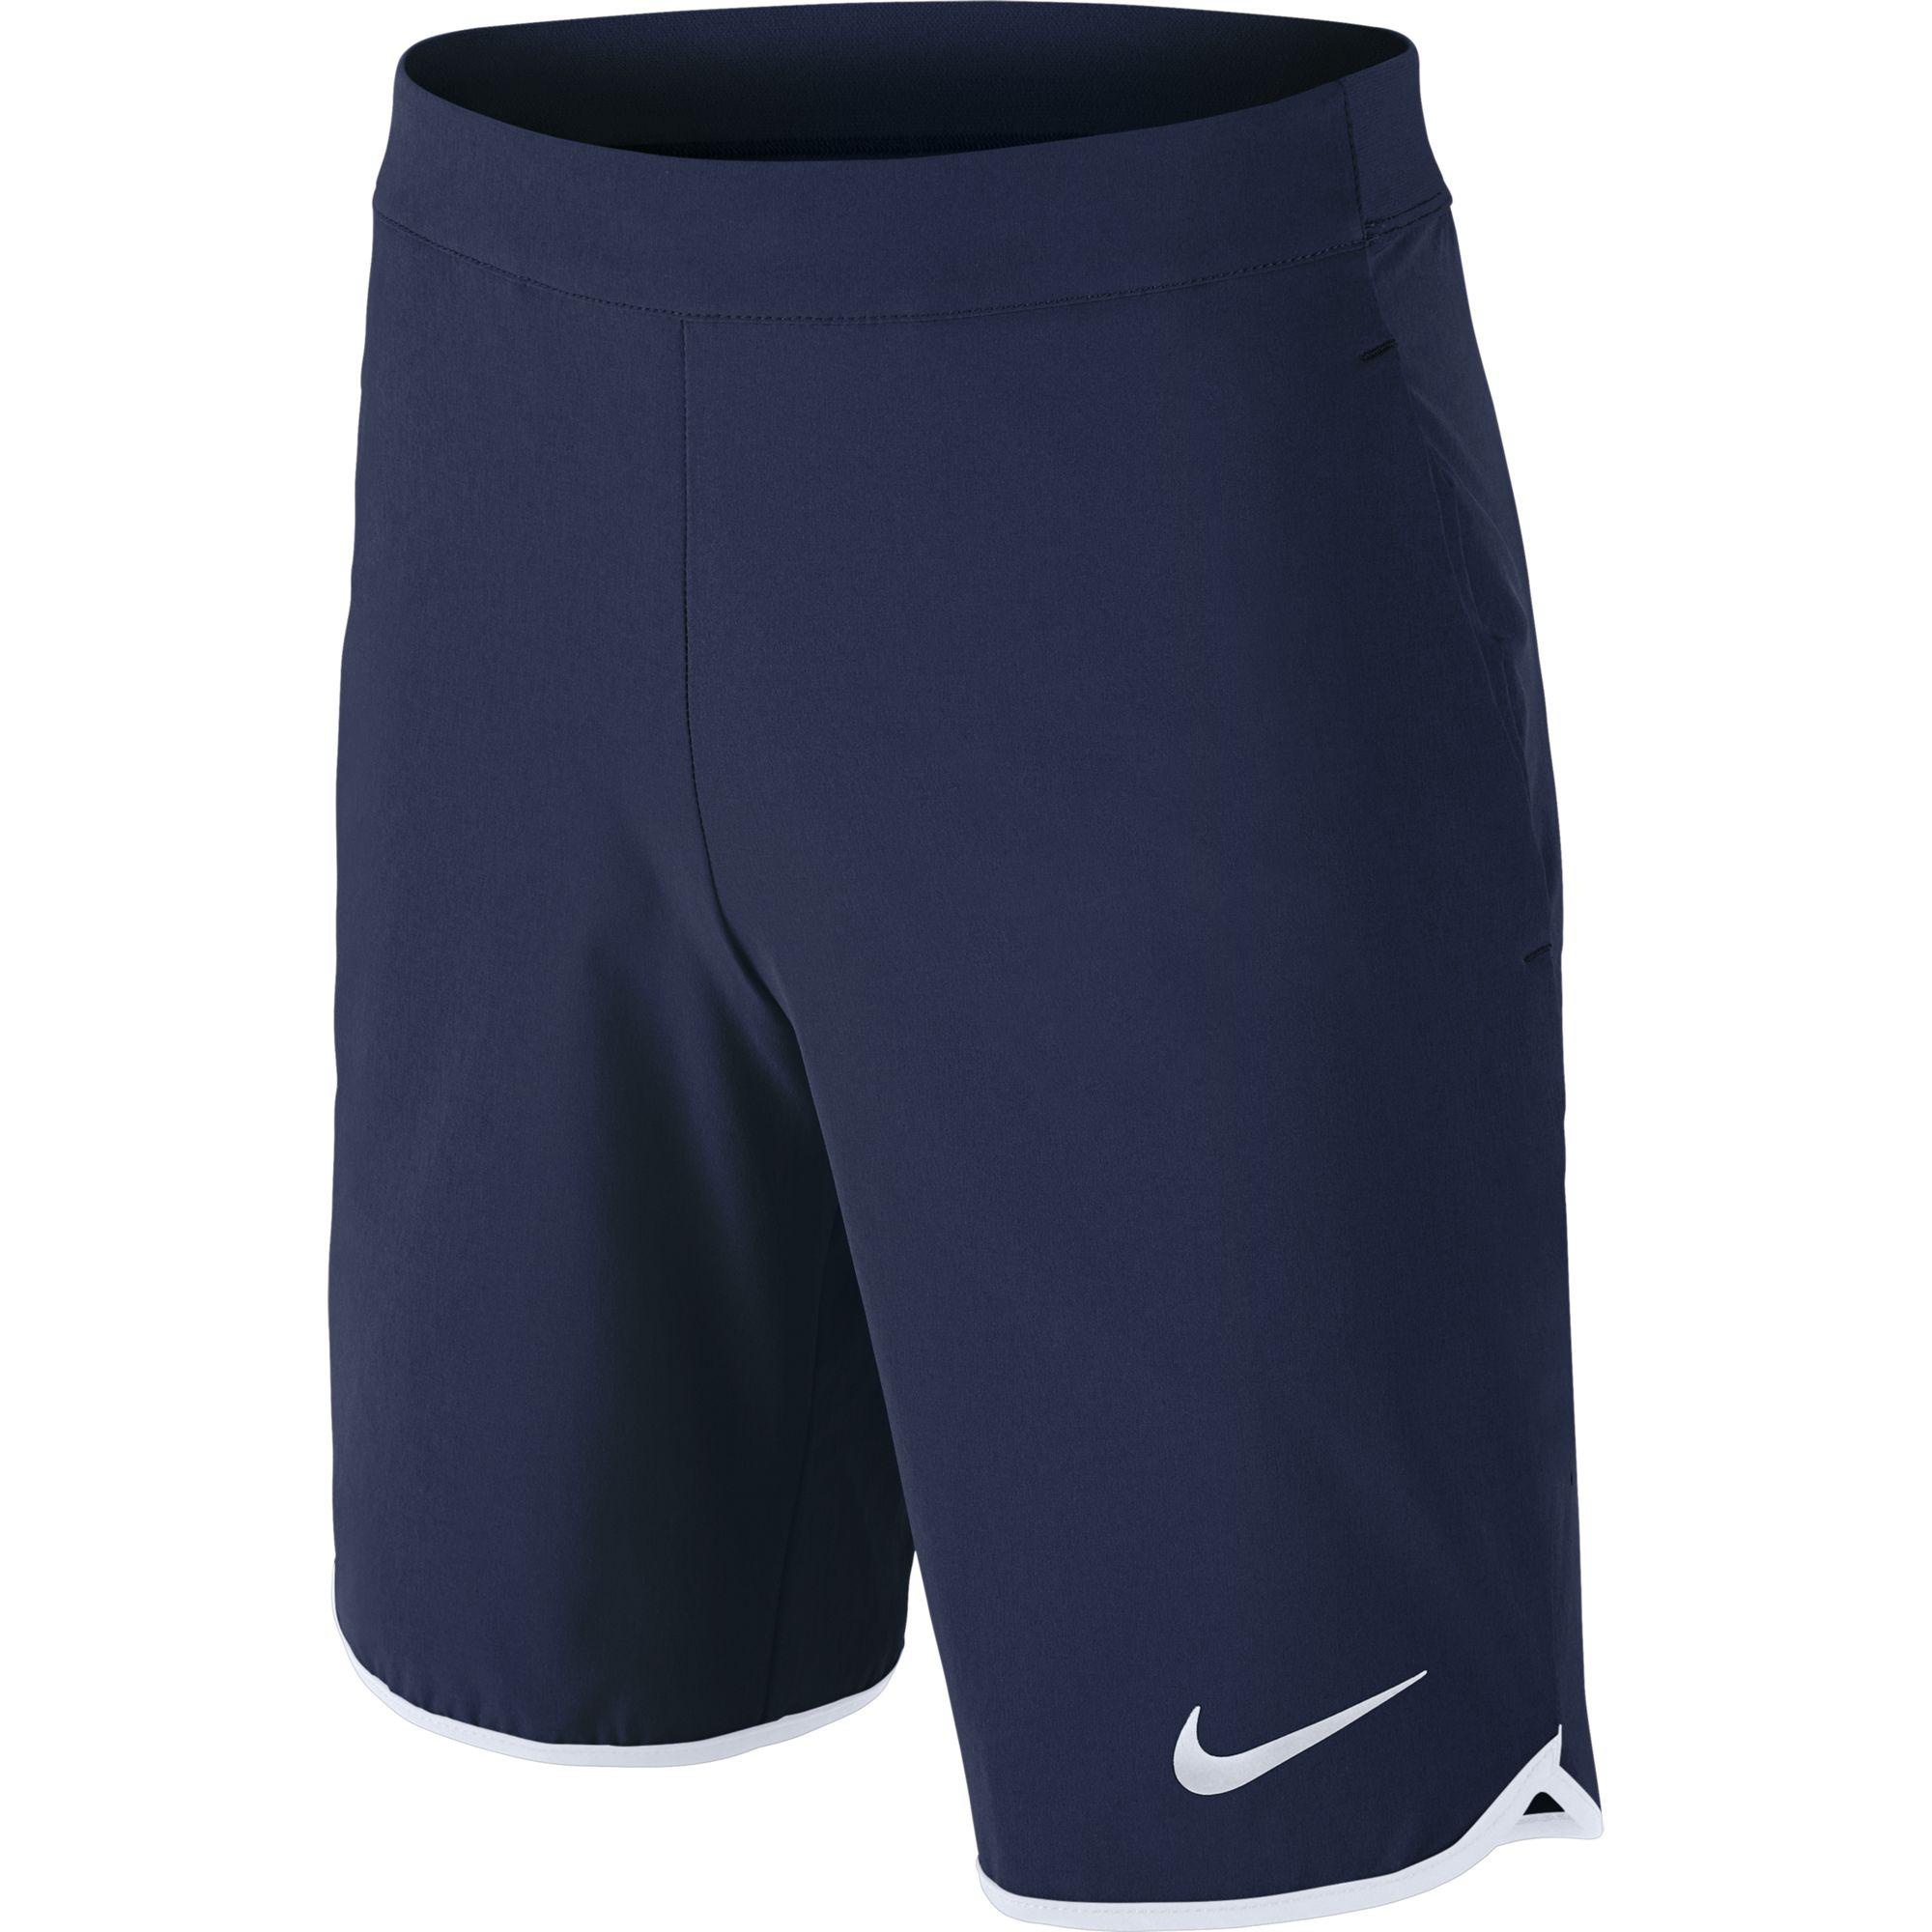 Nike Mens Premier Gladiator 7 Inch Shorts - Deep Royal 